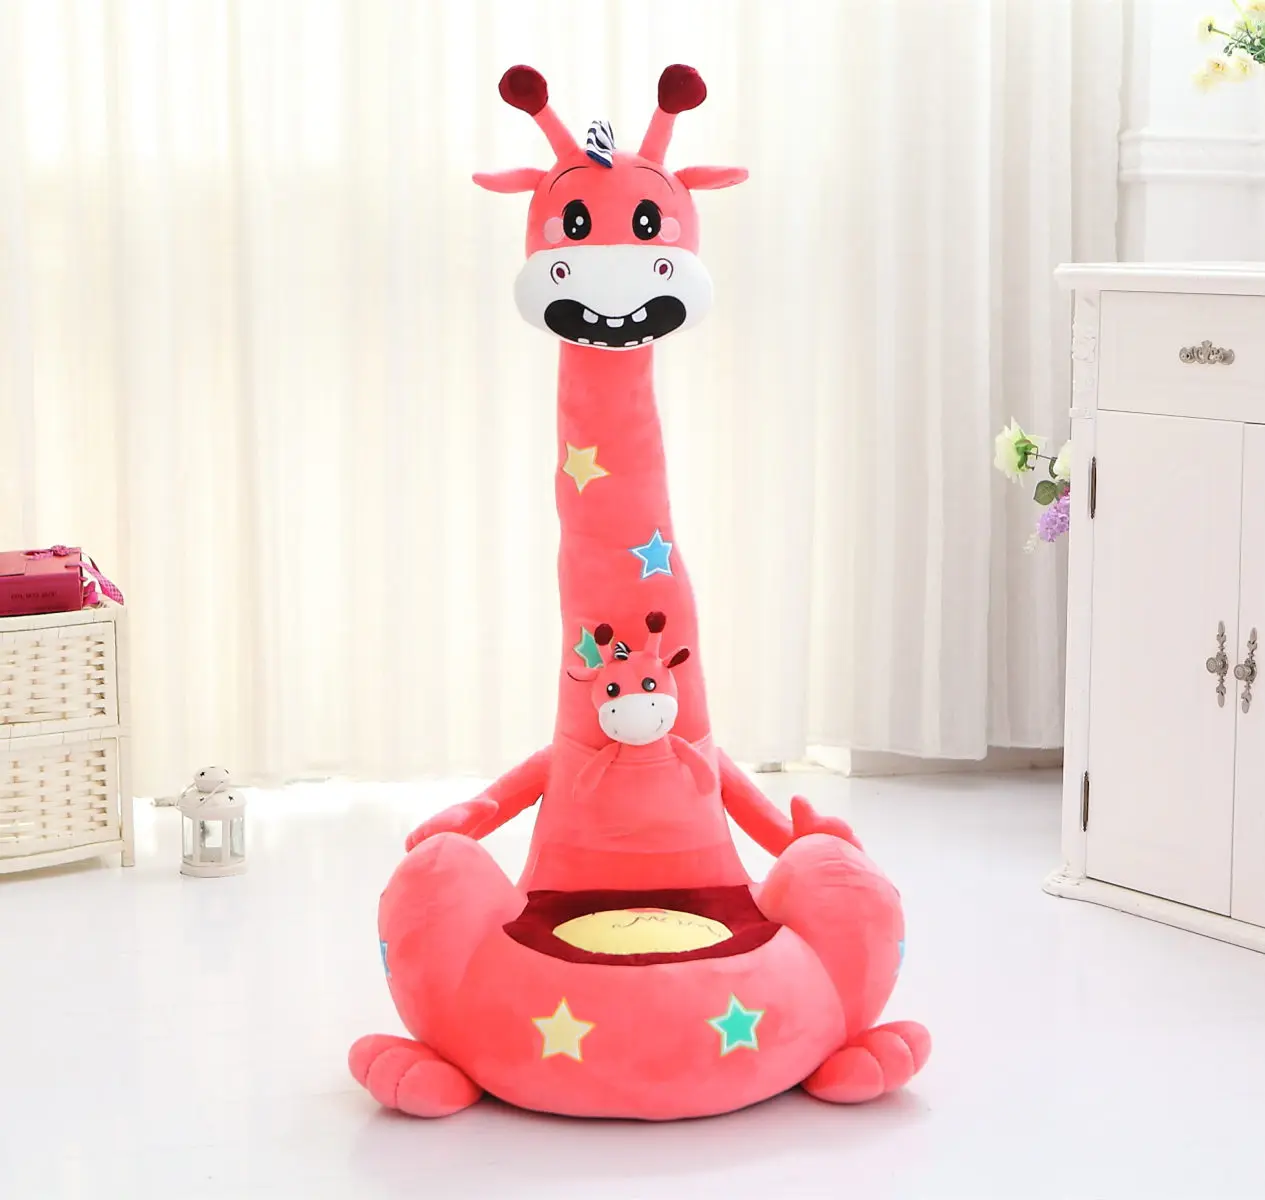 

[Funny] Very cute cartoon soft animal giraffe fox dinosaur Sofa chair cotton stuffed plush toy doll Adult and child can sit